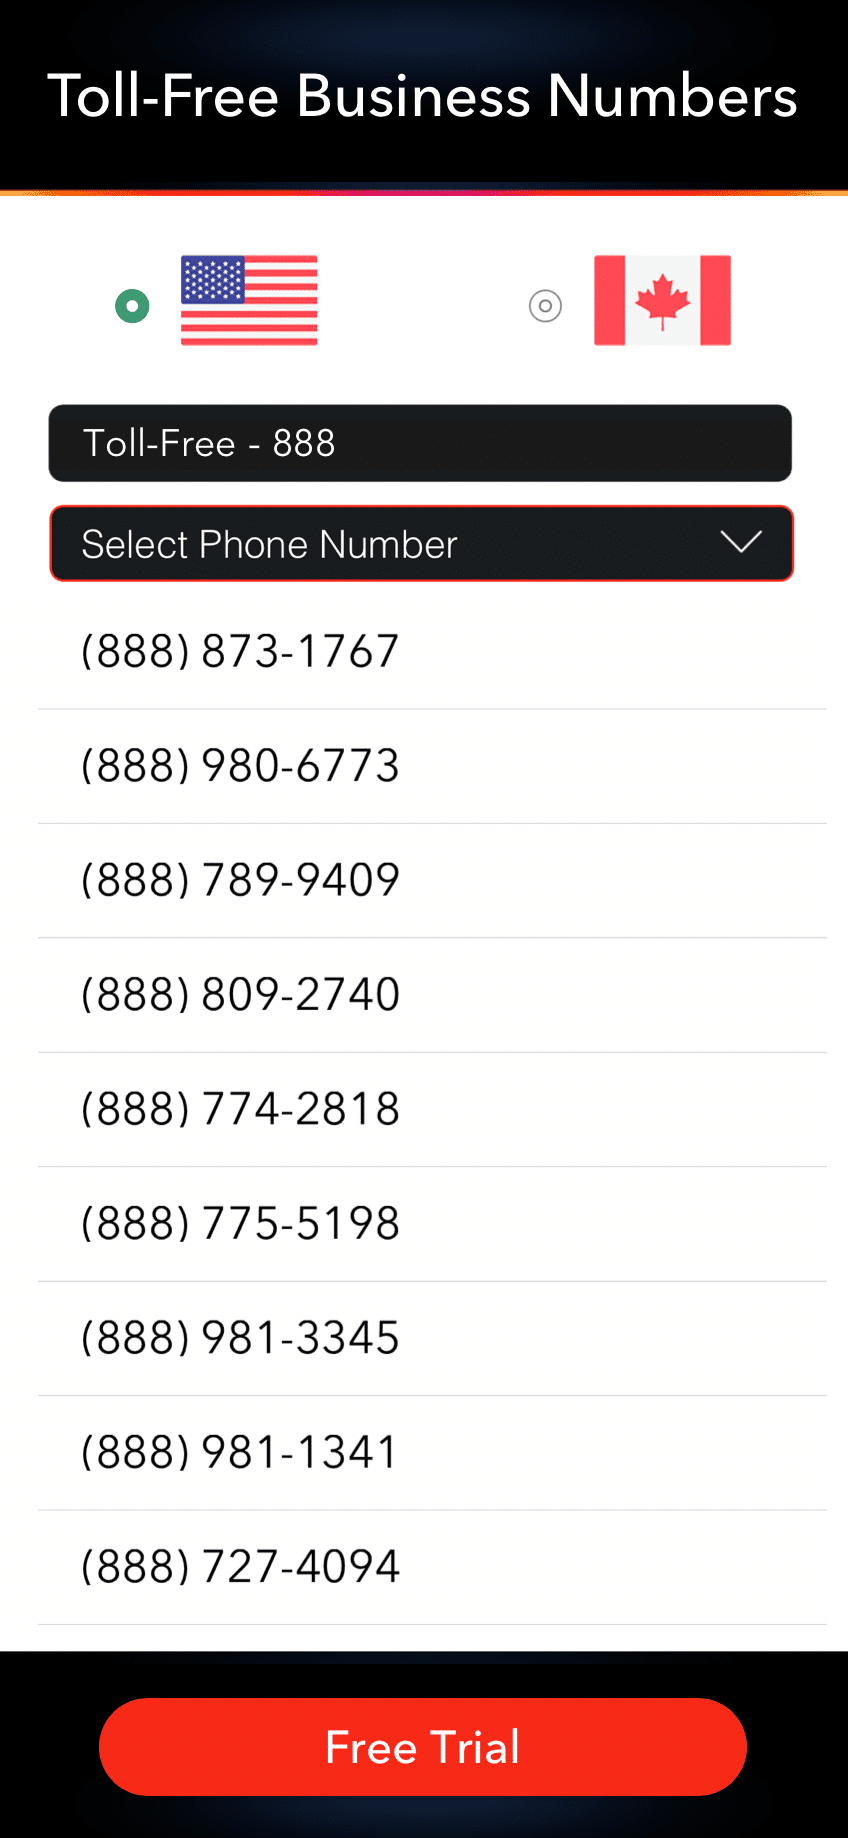 LinkedPhone Mobile App Screenshot of Select Toll-Free Business Phone Number